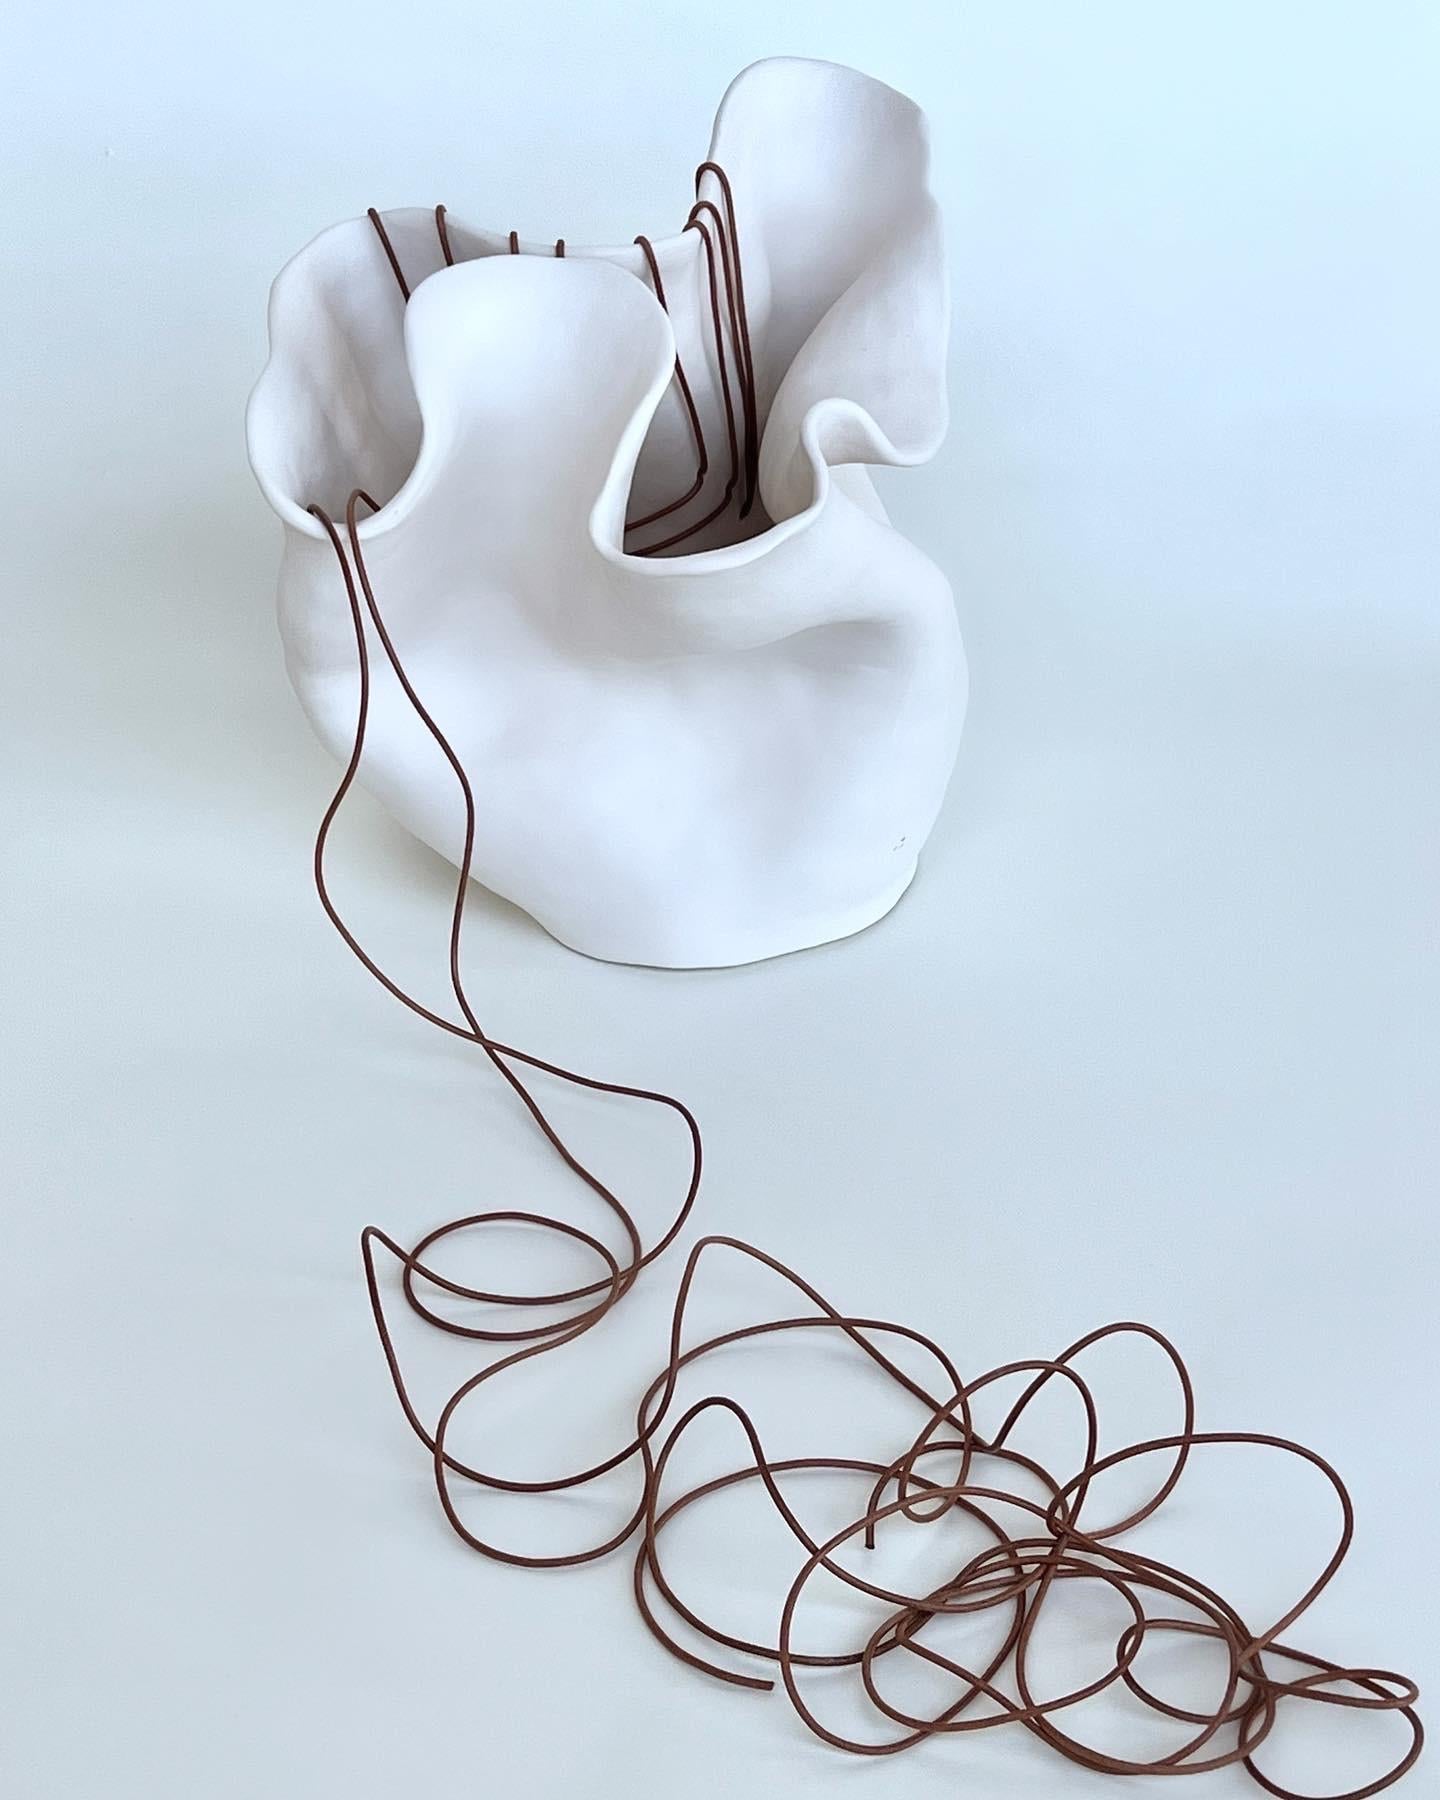 Magda Von Hanau Abstract Sculpture - Nero. From Visceral Series. Sculpture 